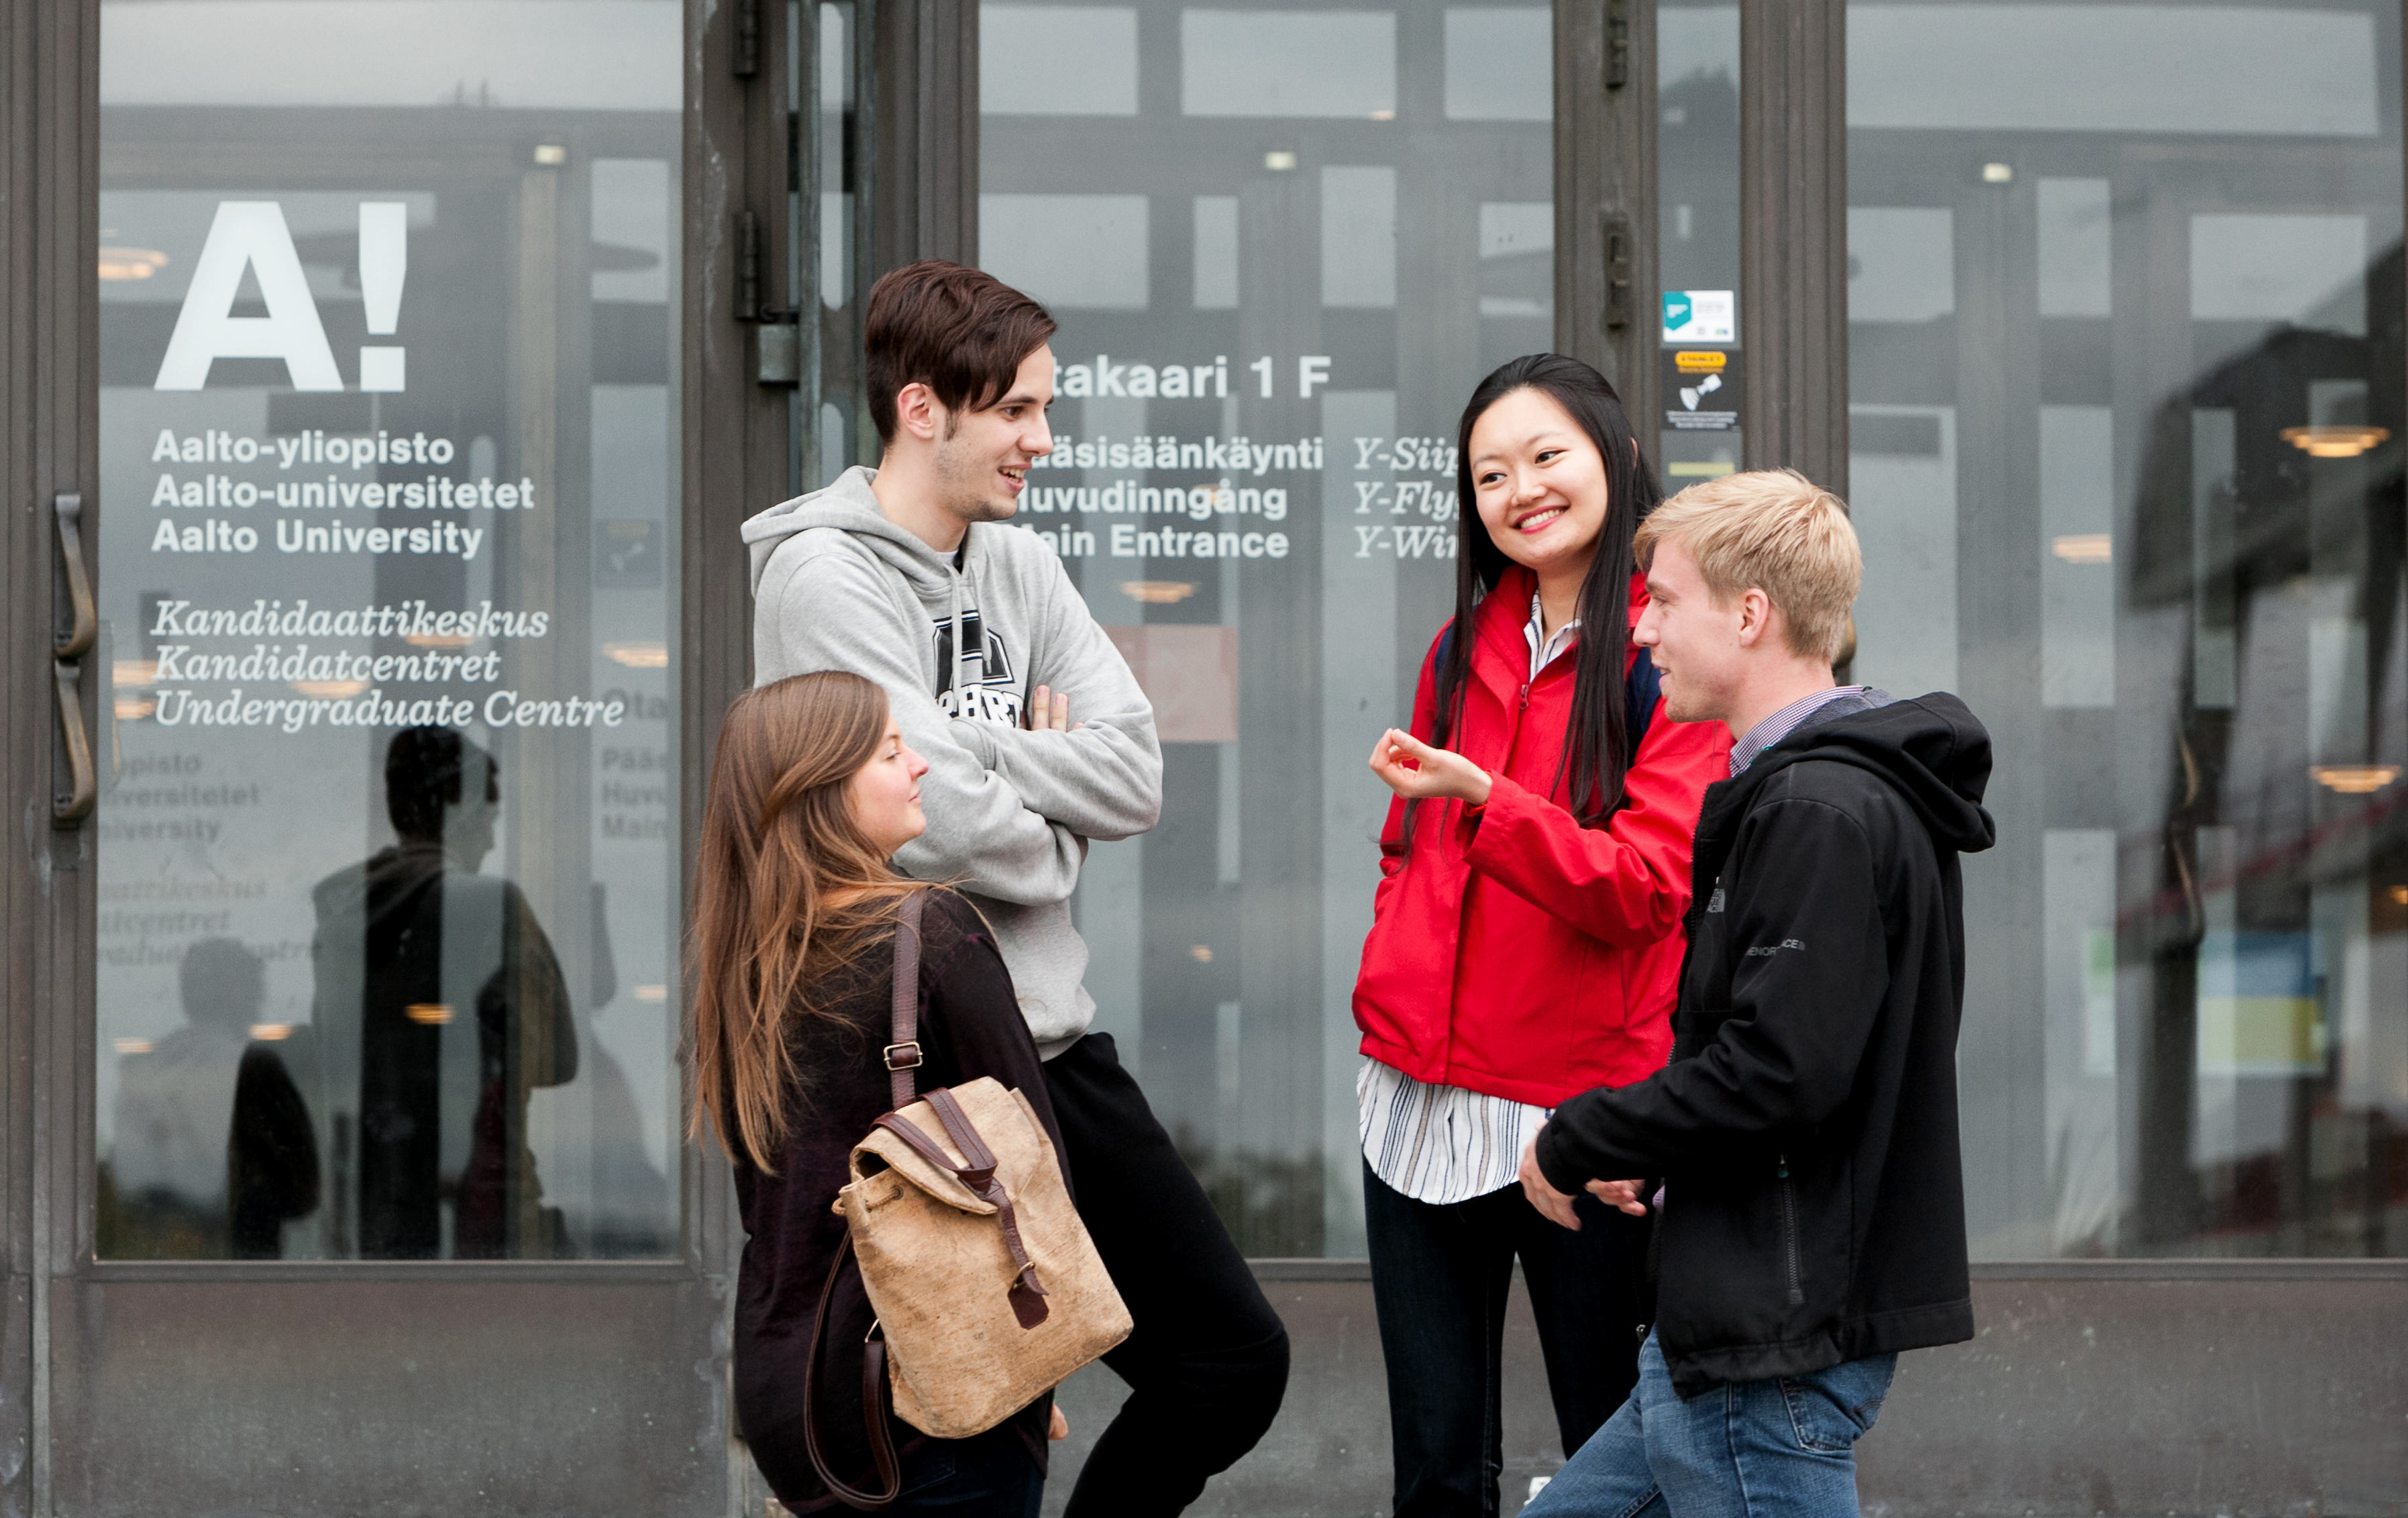 Students at Aalto University